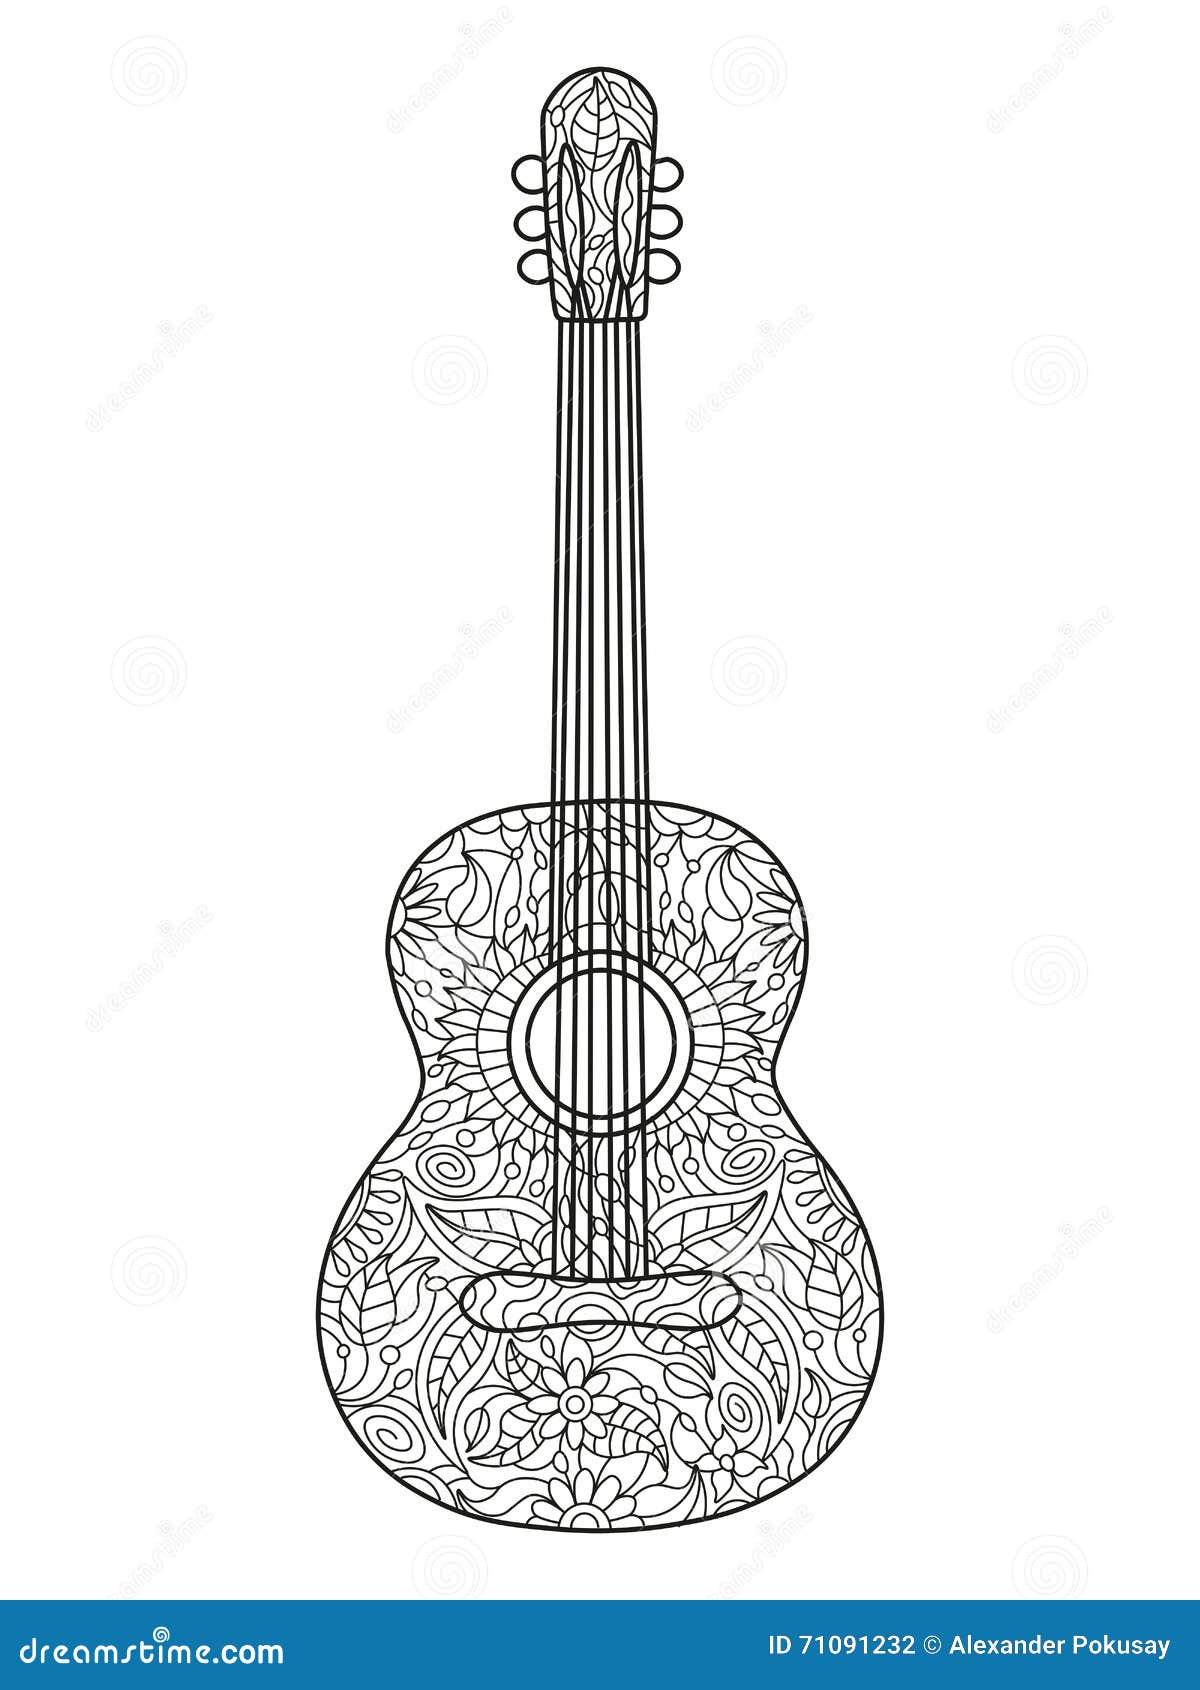 Image for doodle art guitar